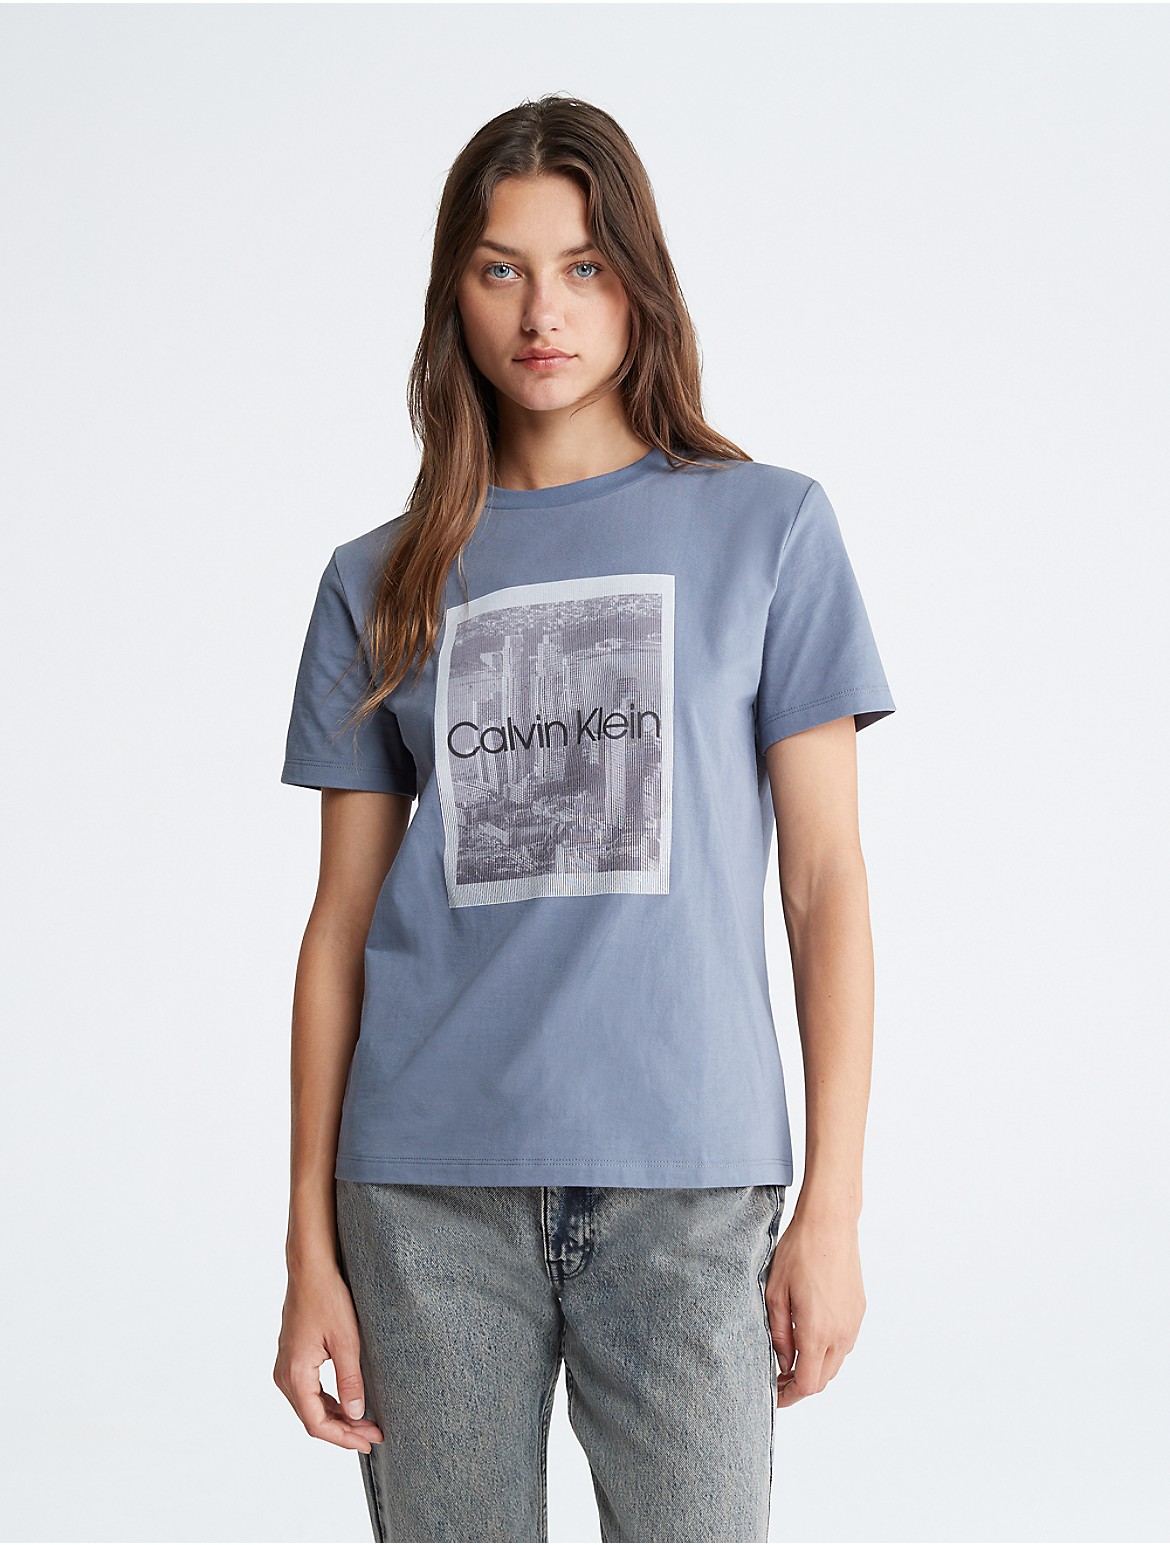 Calvin Klein Women's City Graphic Crewneck T-Shirt - Blue - XS